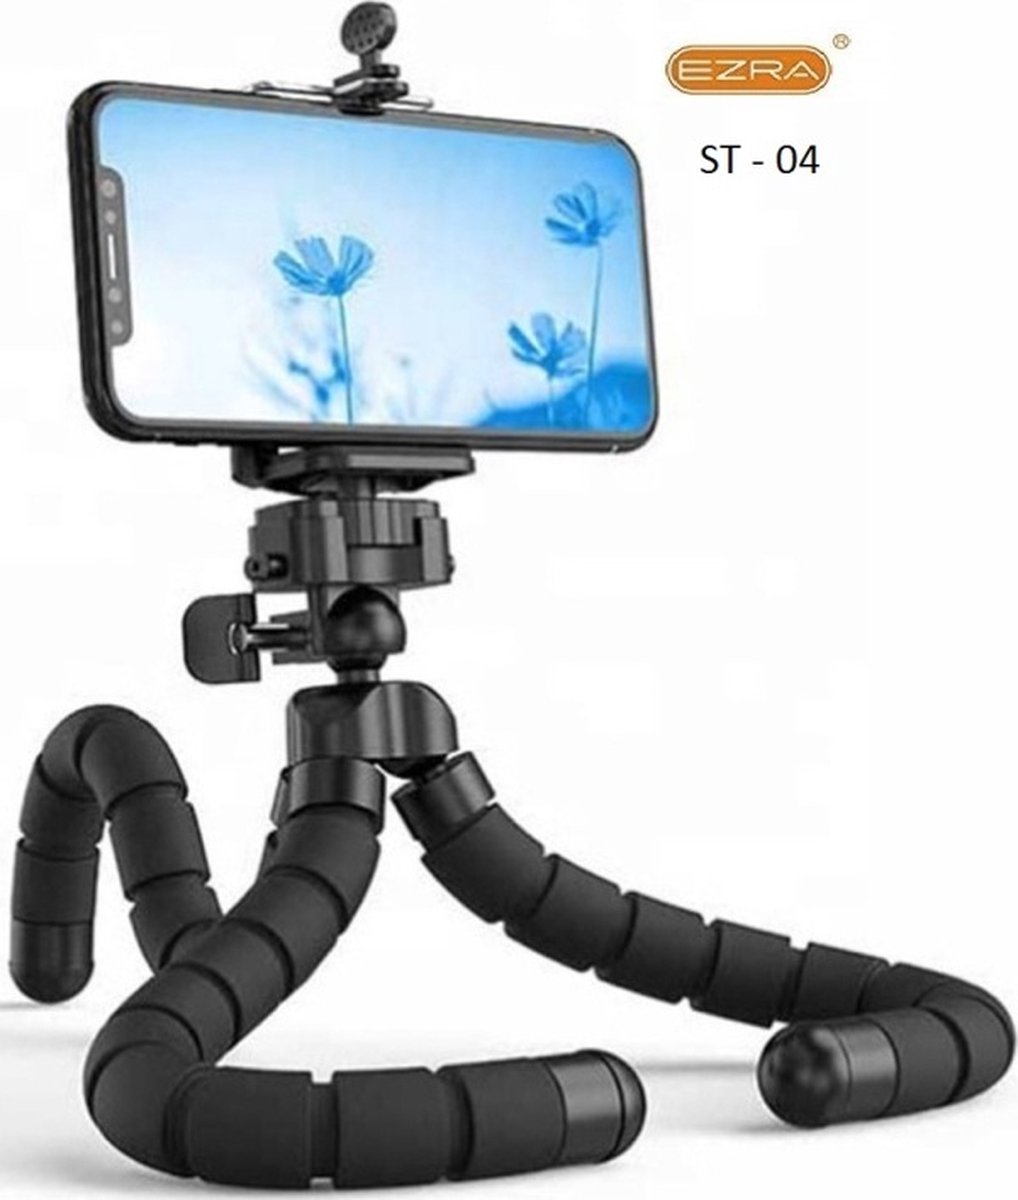 Flex arm tripod with remote Bluetooth shutter ST-04 EZRA